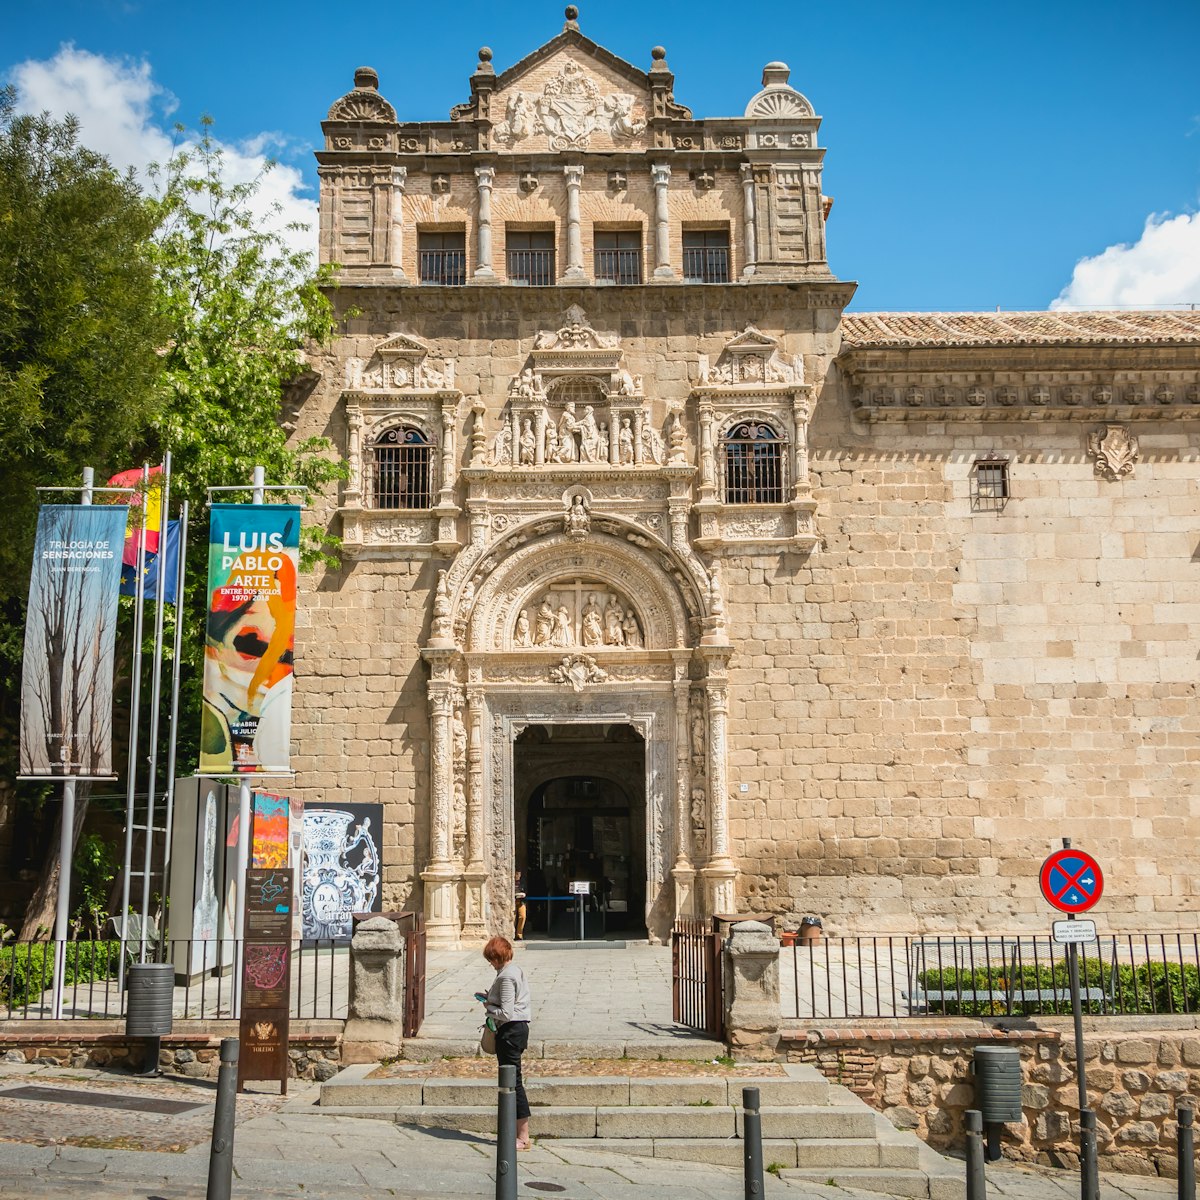 The front of the Santa Cruz Museum in Toledo.